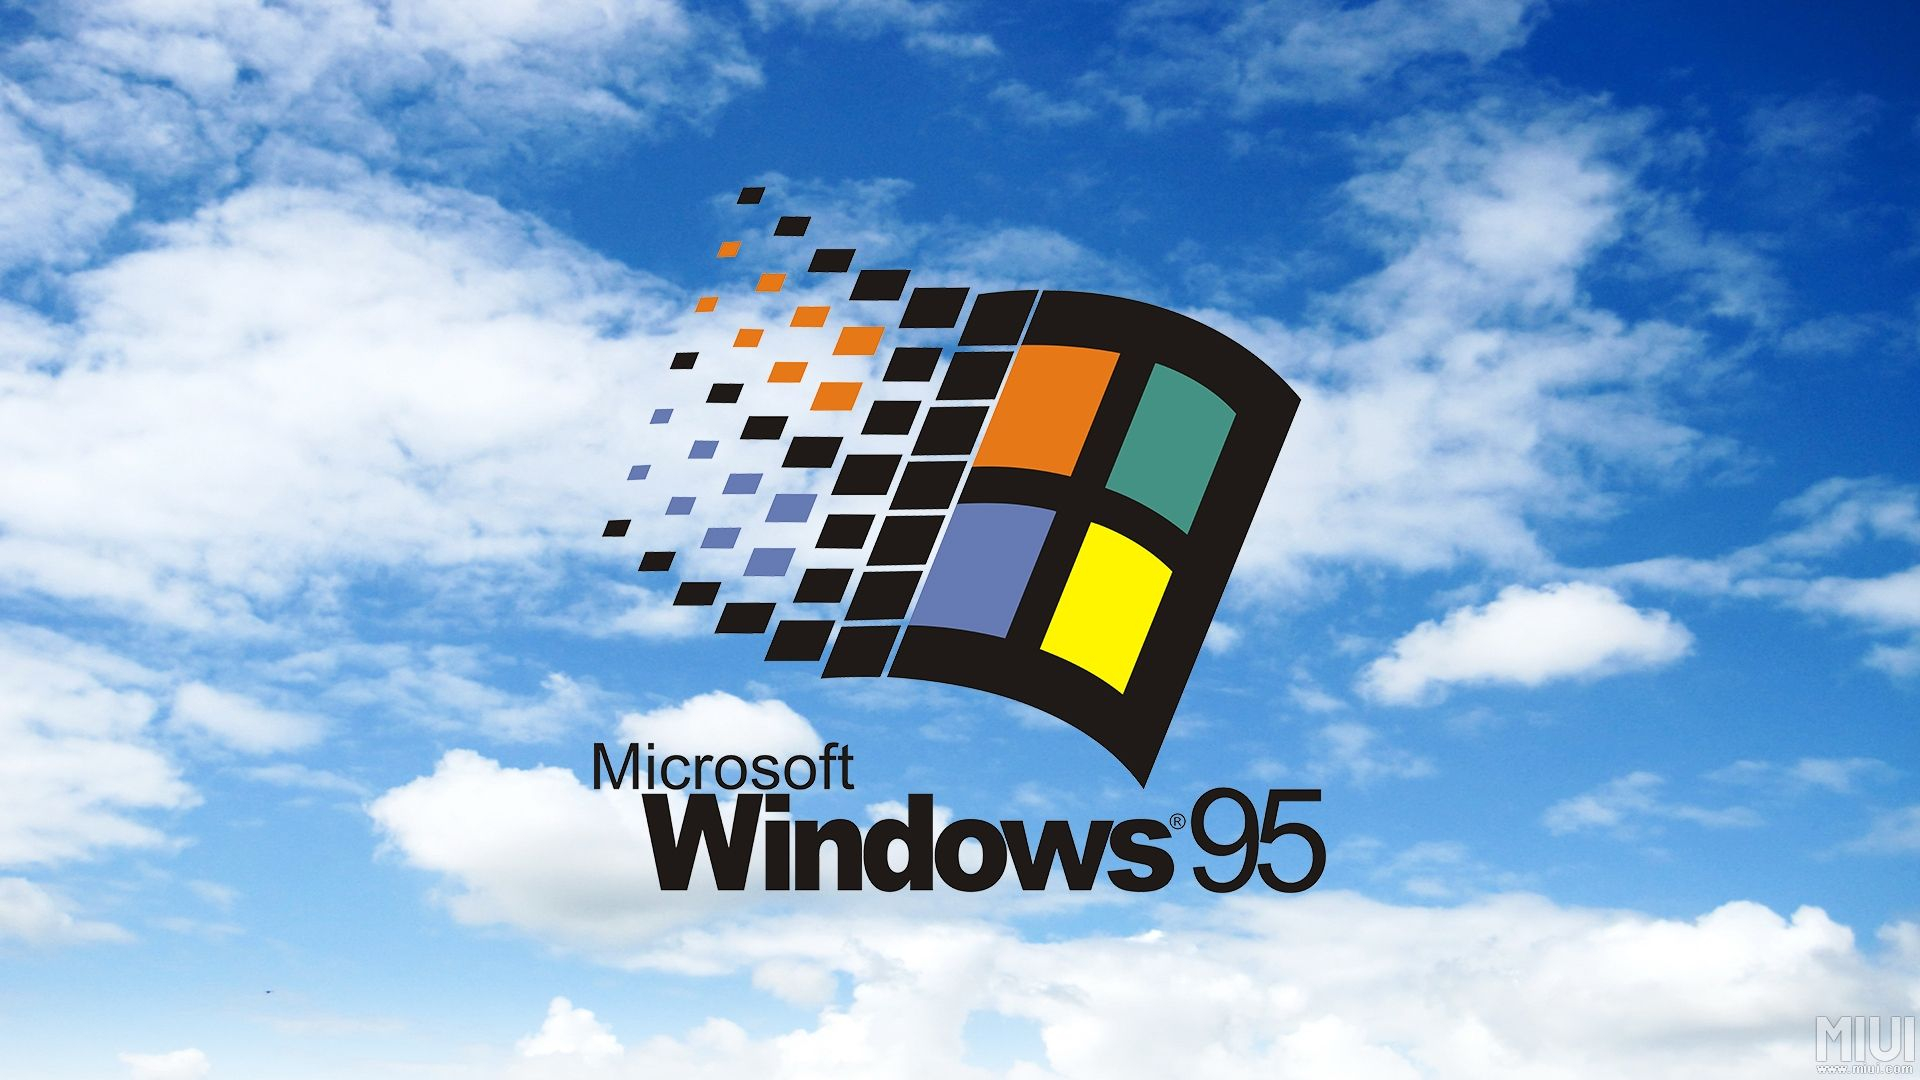 A microsoft windows logo is shown on the screen - Windows 95